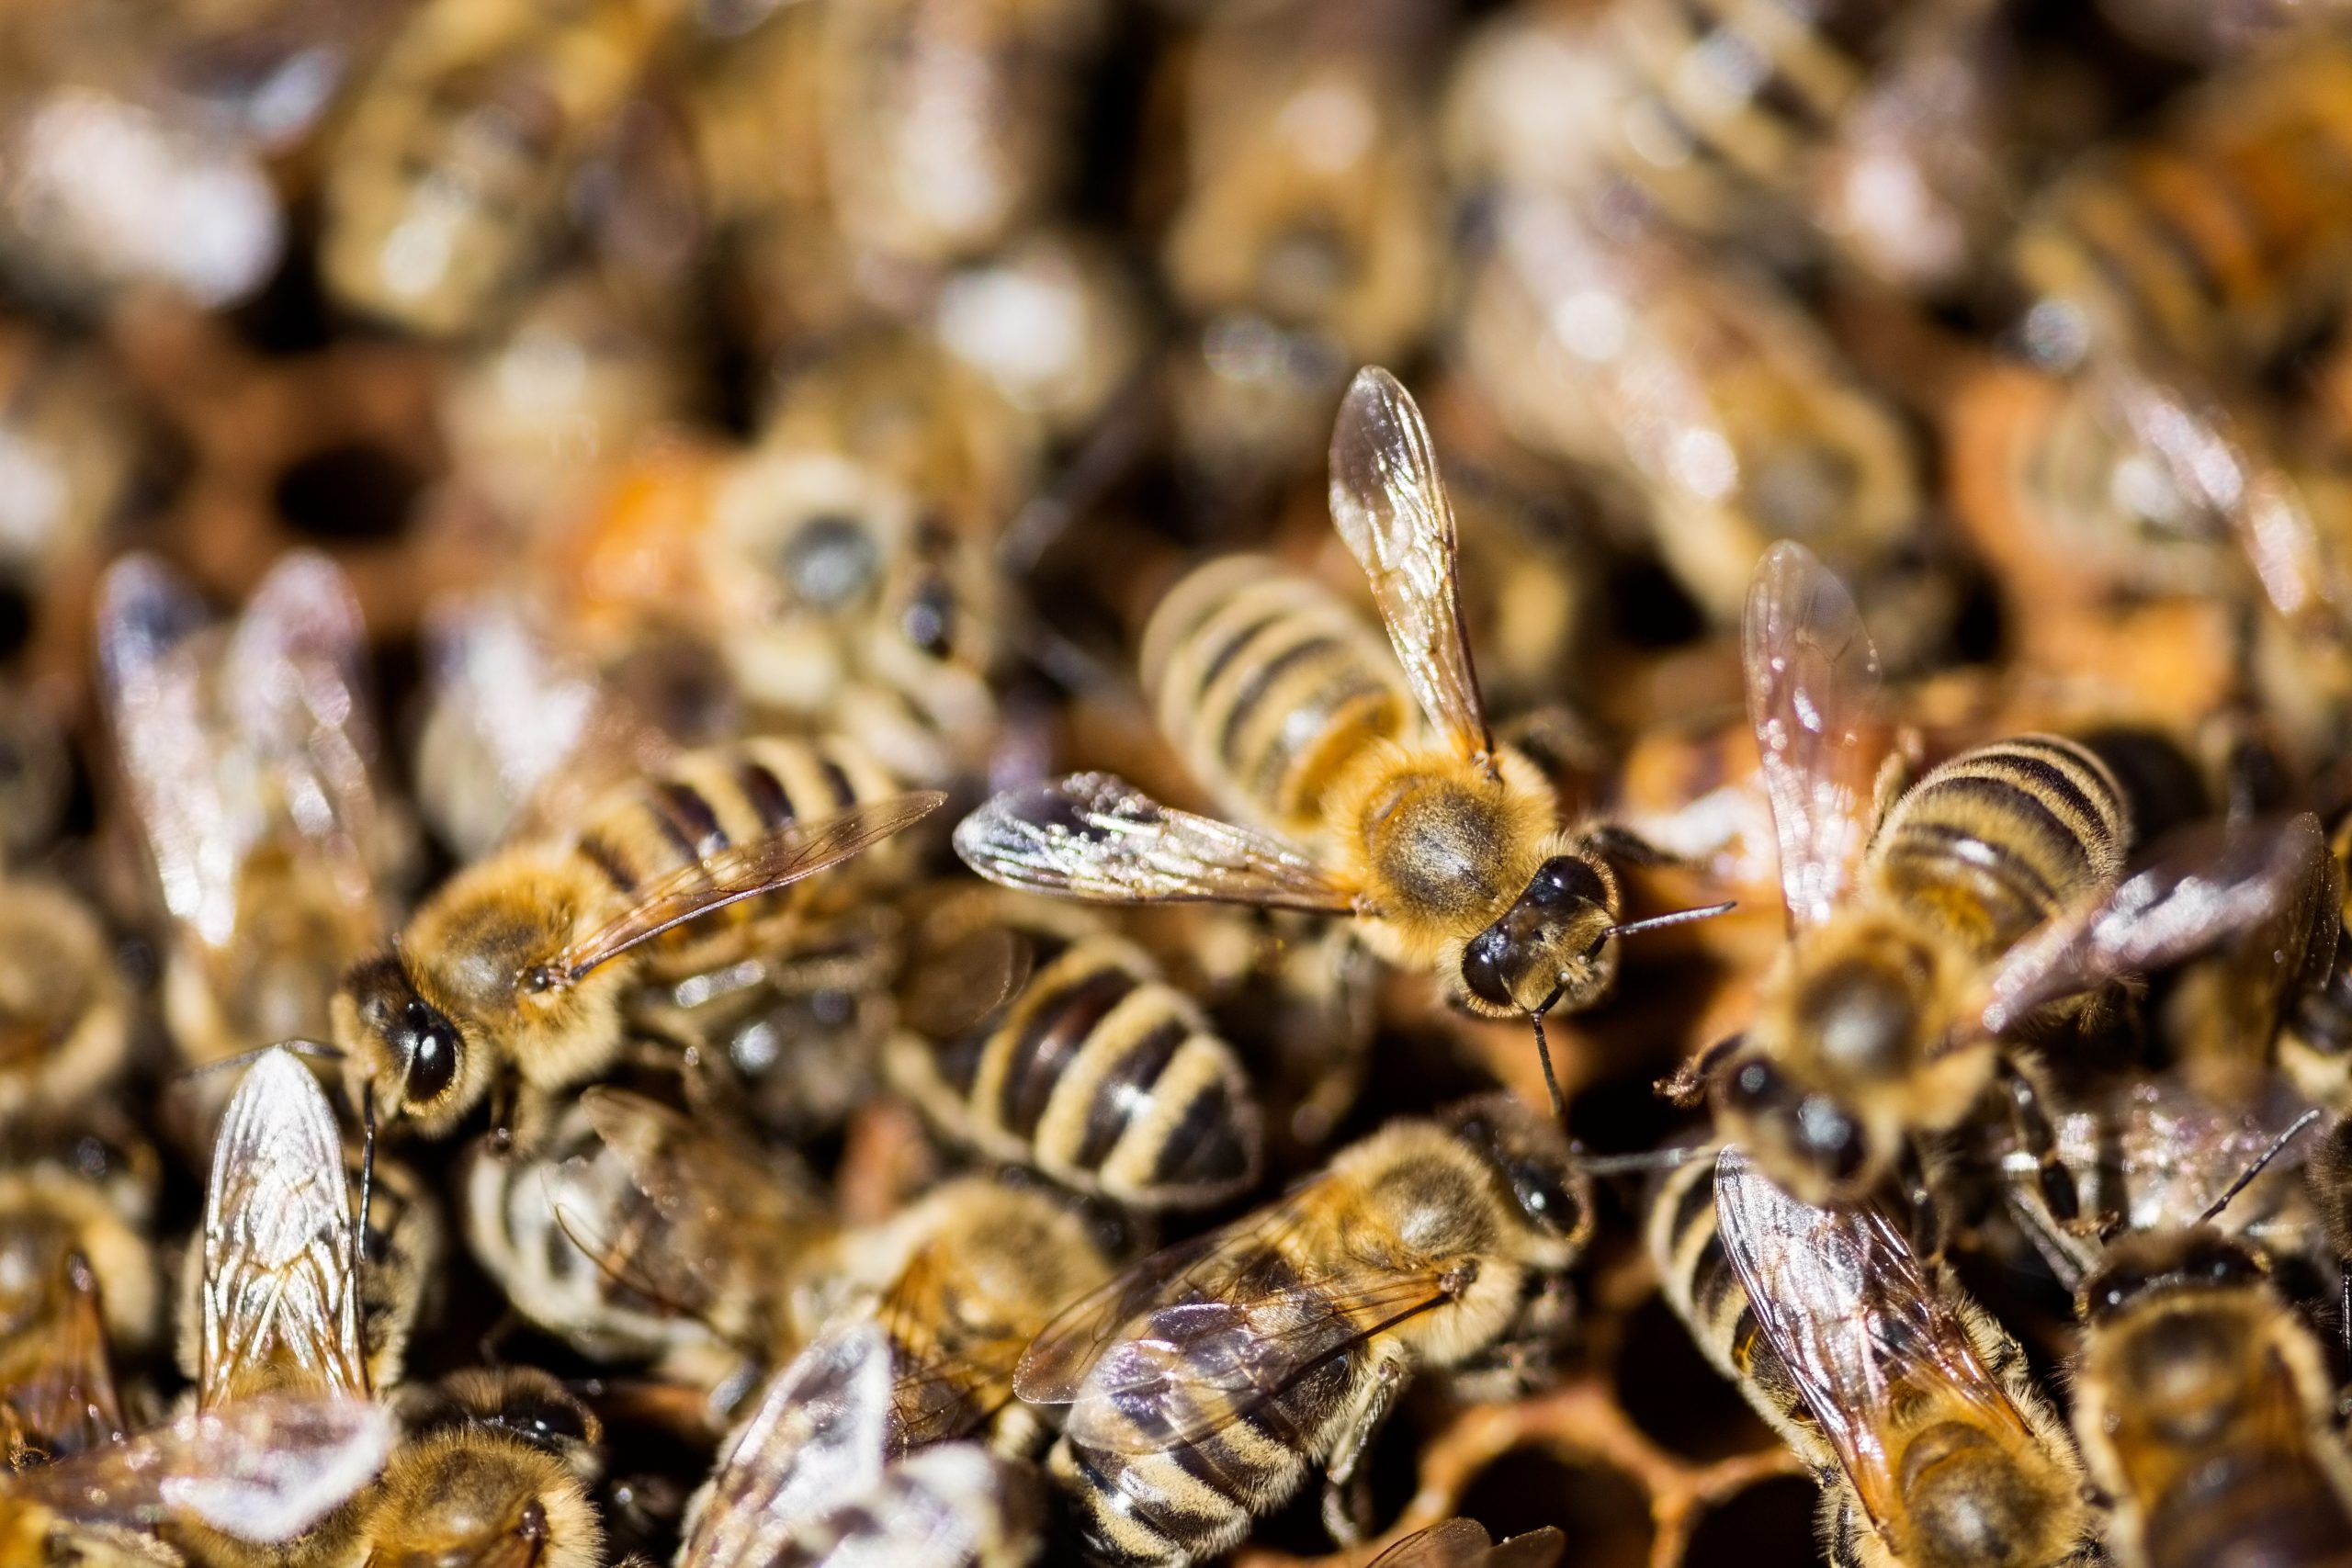 North Dakota Prairie: A Lost Honeybee Refuge?